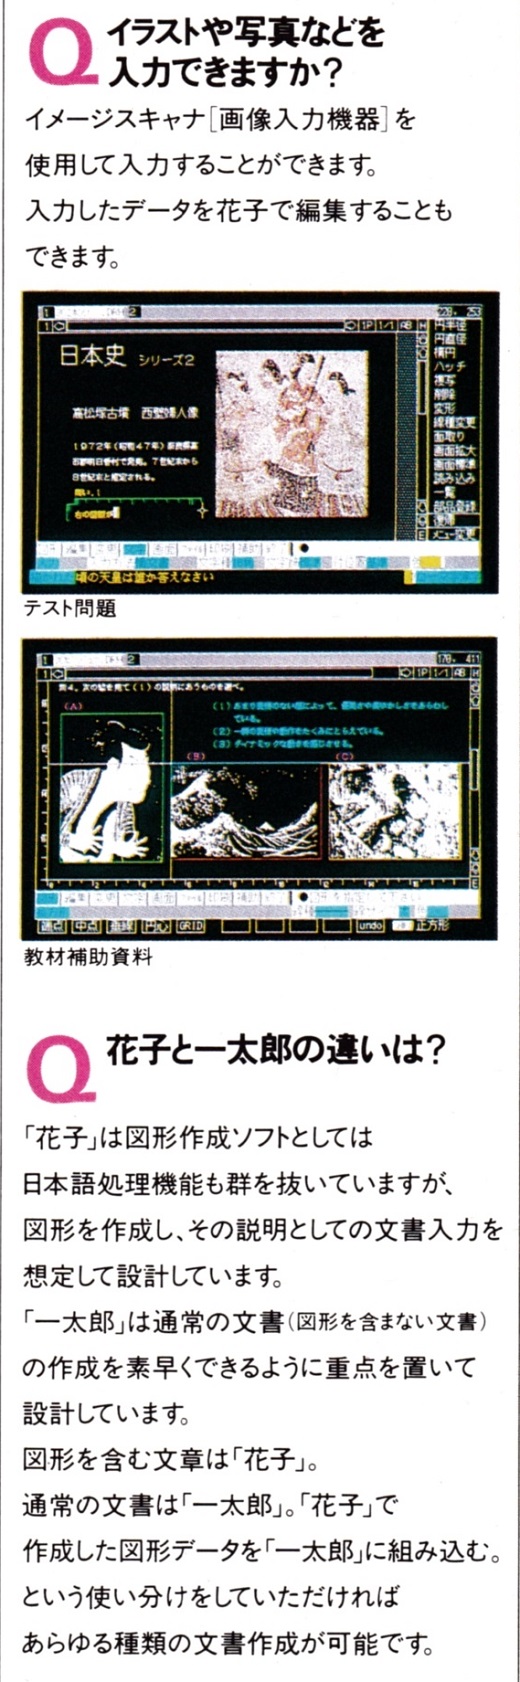 ASCII1987(04)a17花子説明11_W520.jpg